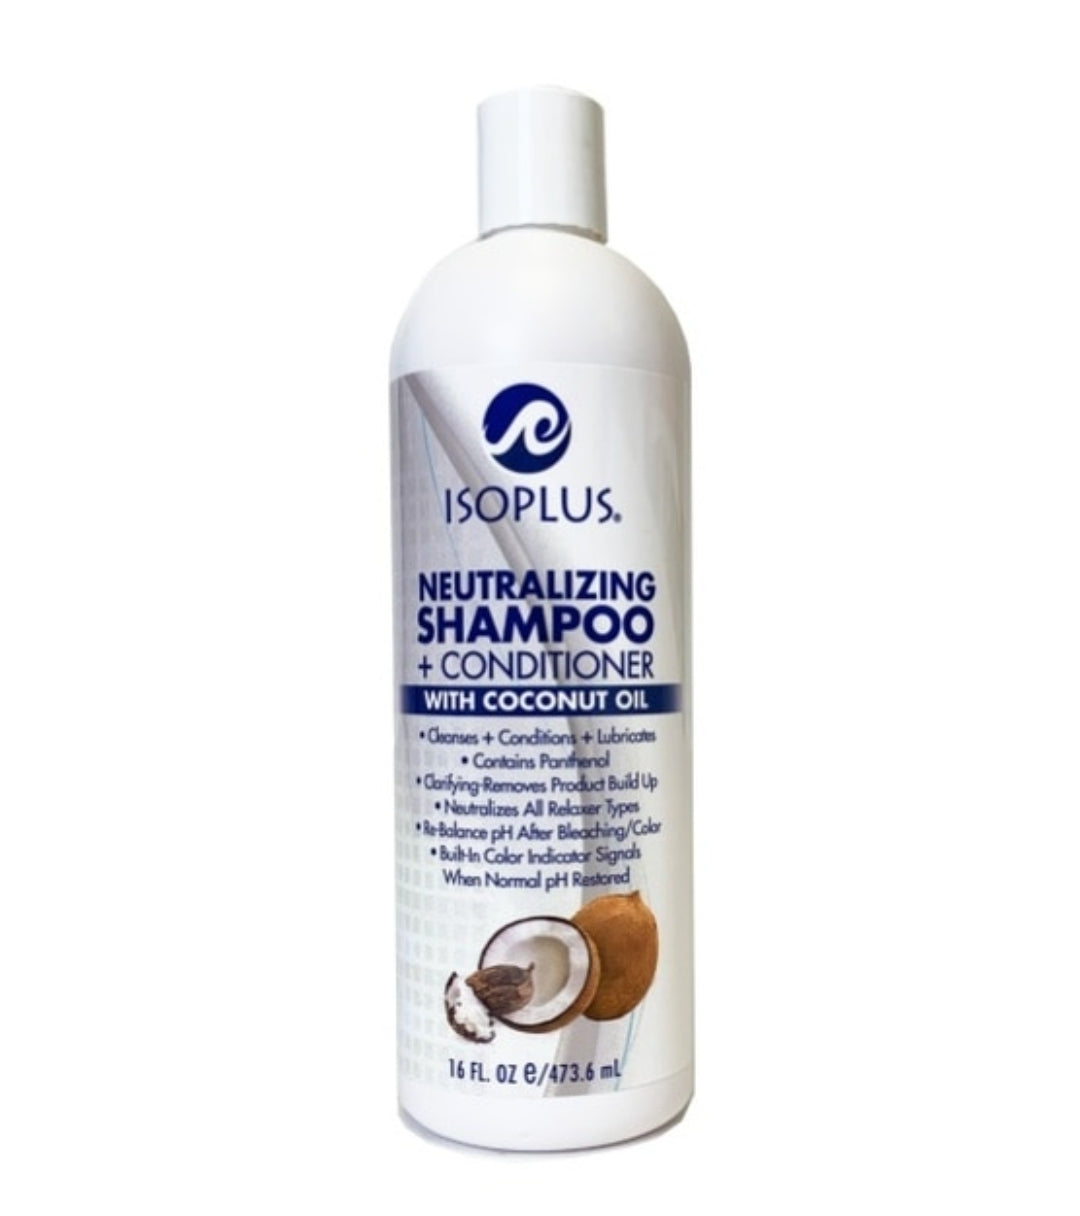 Isoplus-Neutralizing Shampoo + Conditioner with Coconut Oil 16oz